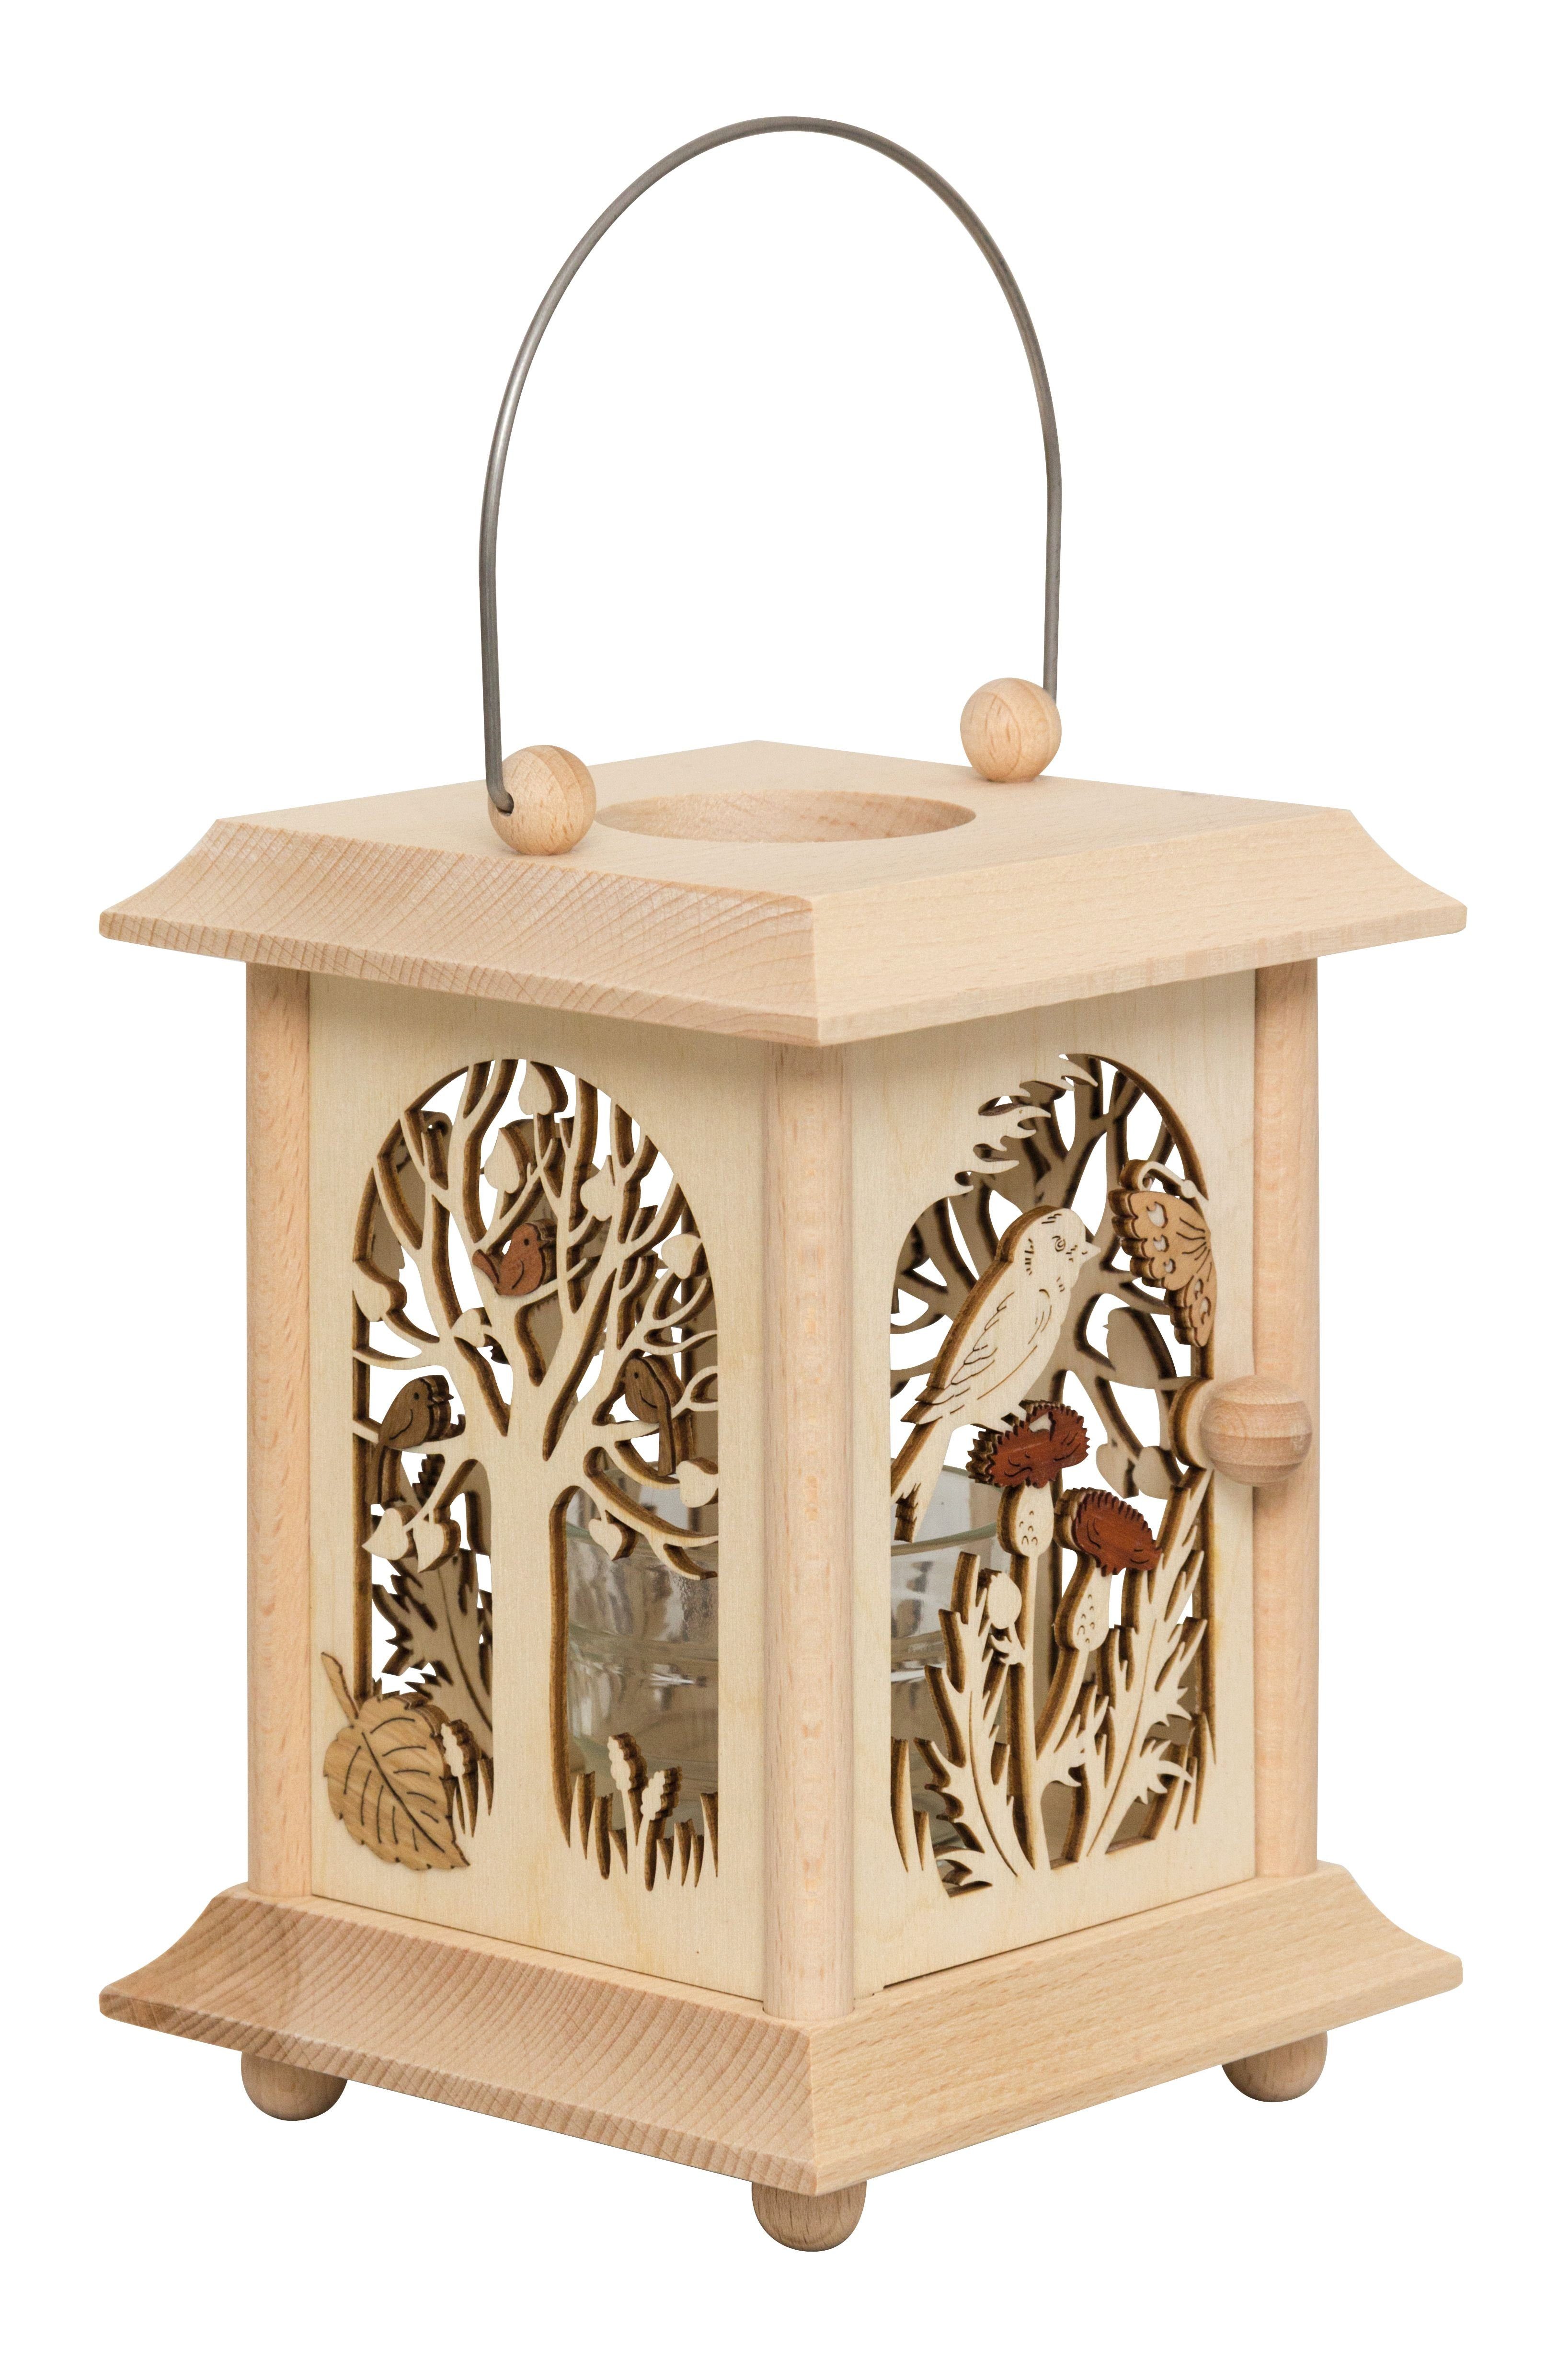 Kuhnert Kerzenlaterne 27053, Baum-Motiv, hochwertige Tischlaterne aus Holz, Made in Germany